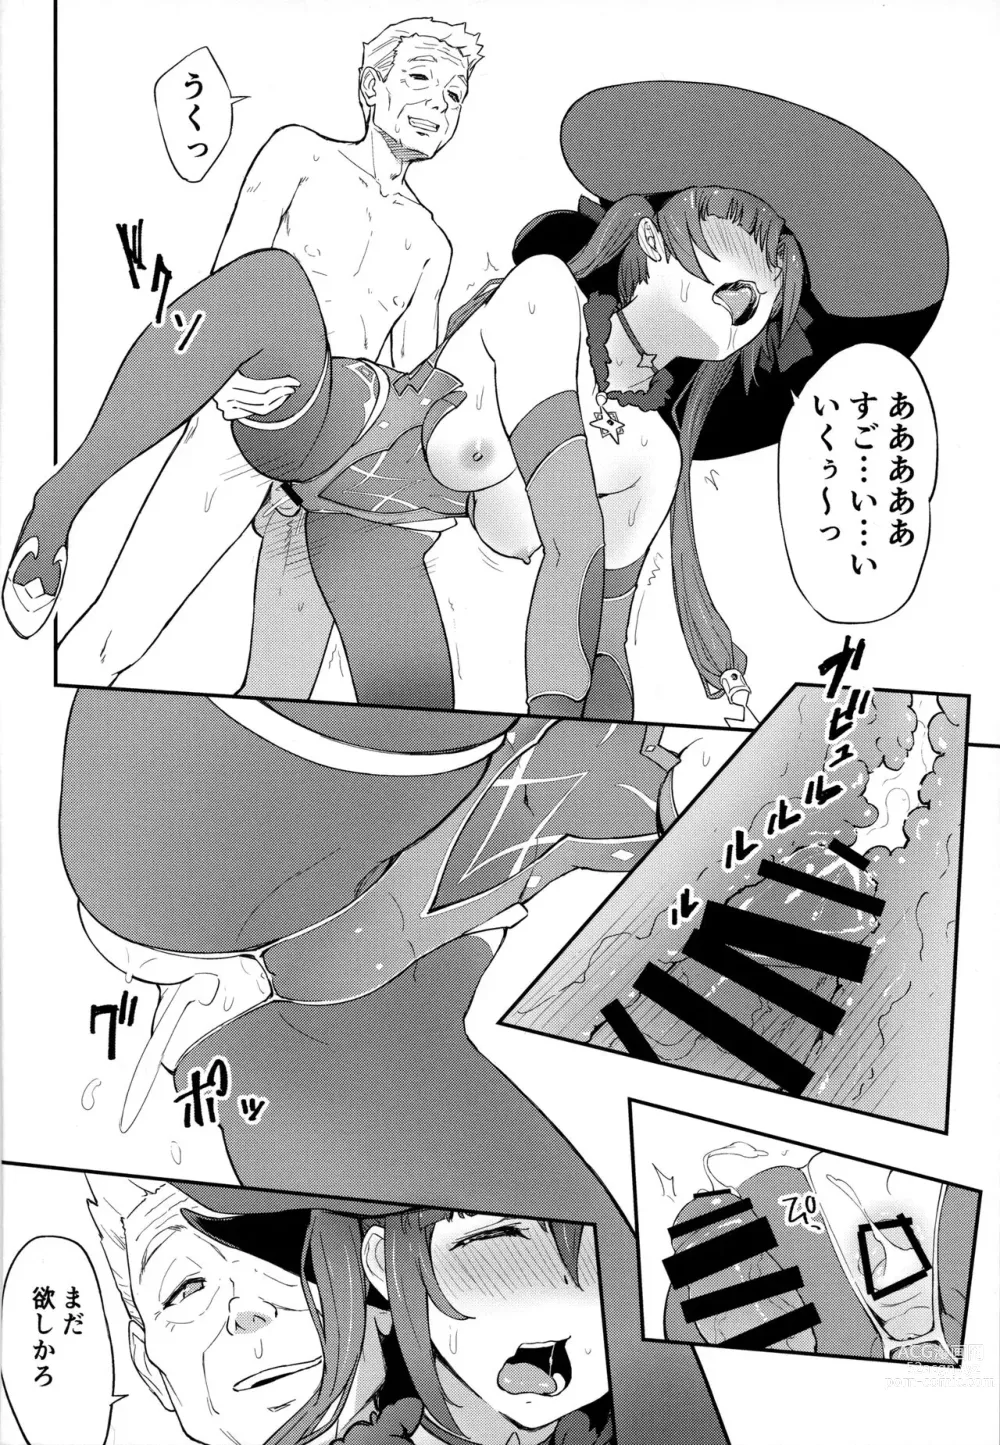 Page 5 of doujinshi Mona-Gete 3